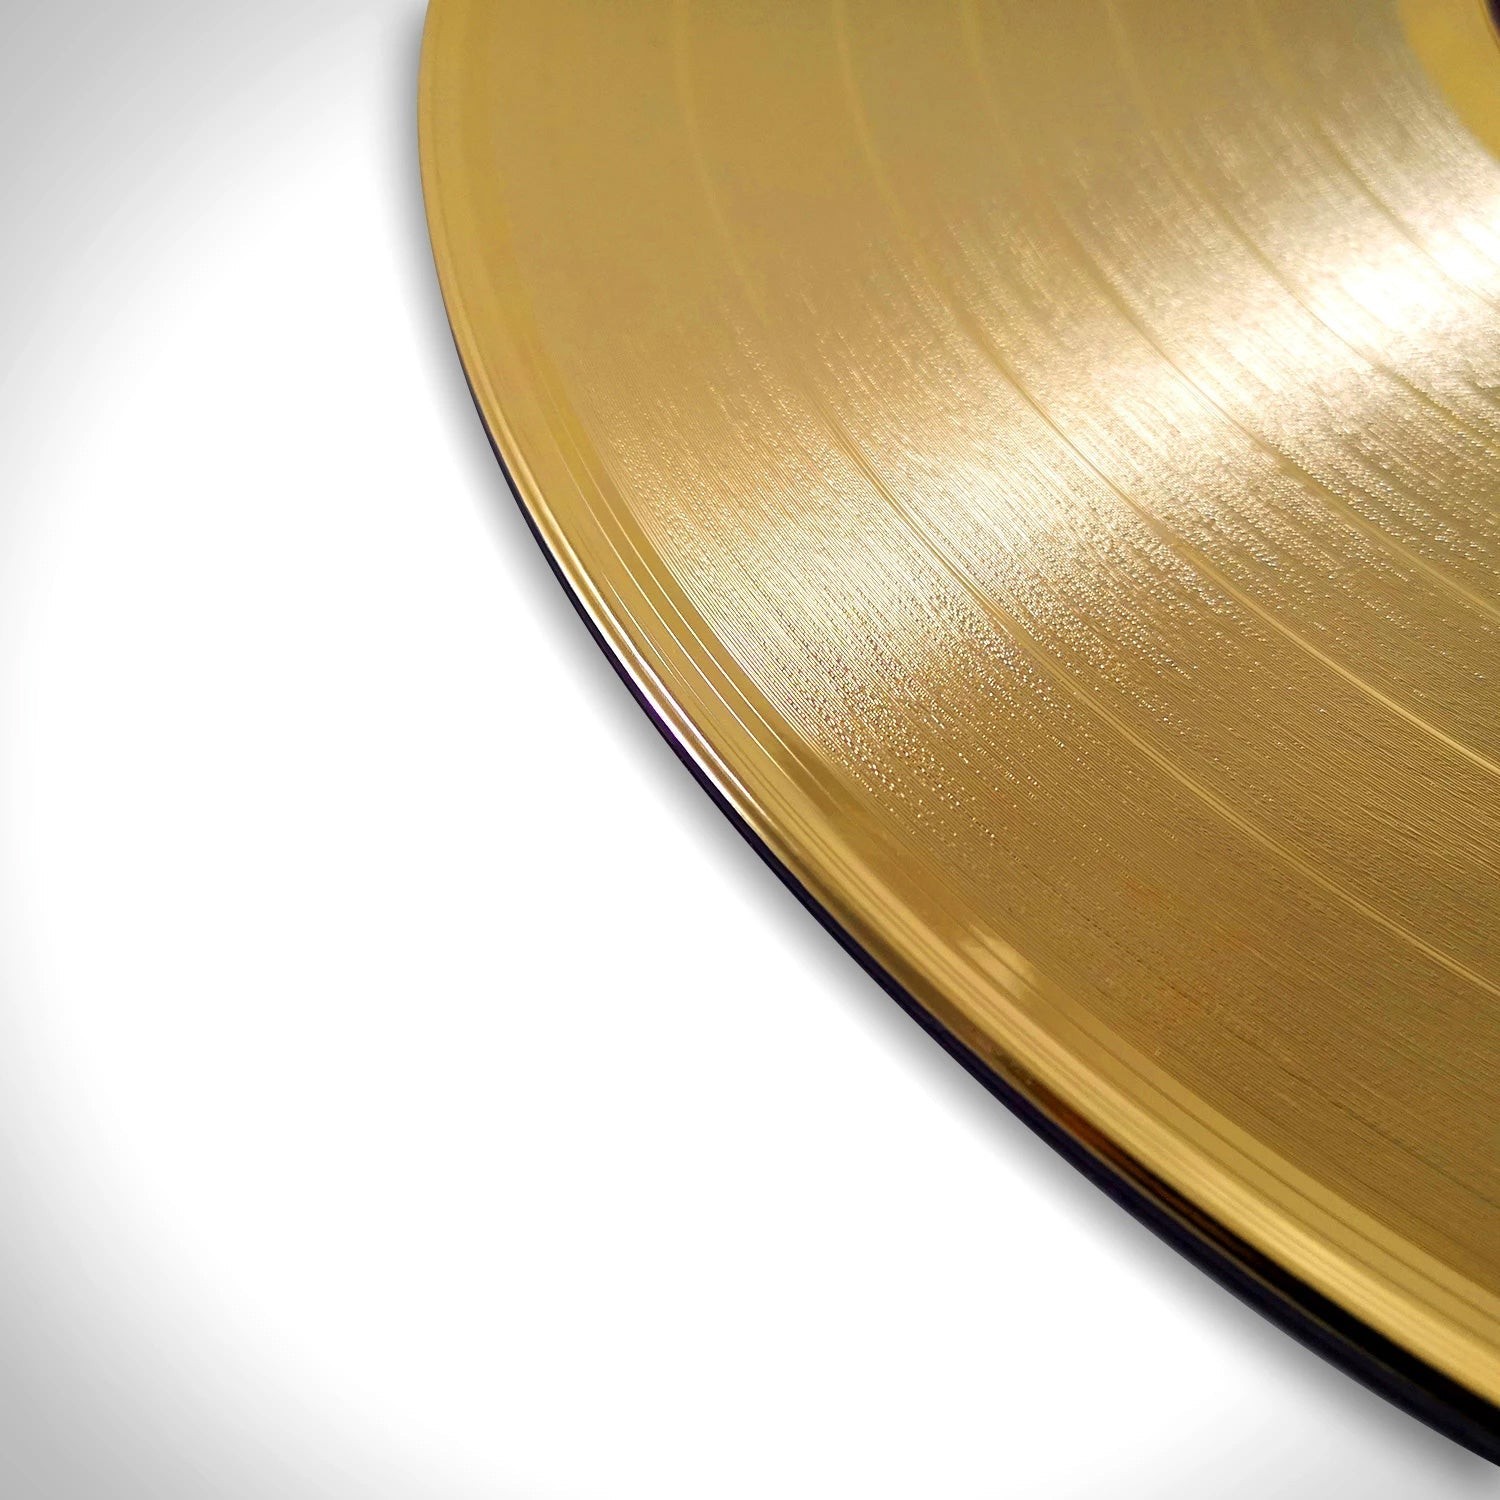 Conan Gray - Superache Gold LP Limited Signature Edition Custom